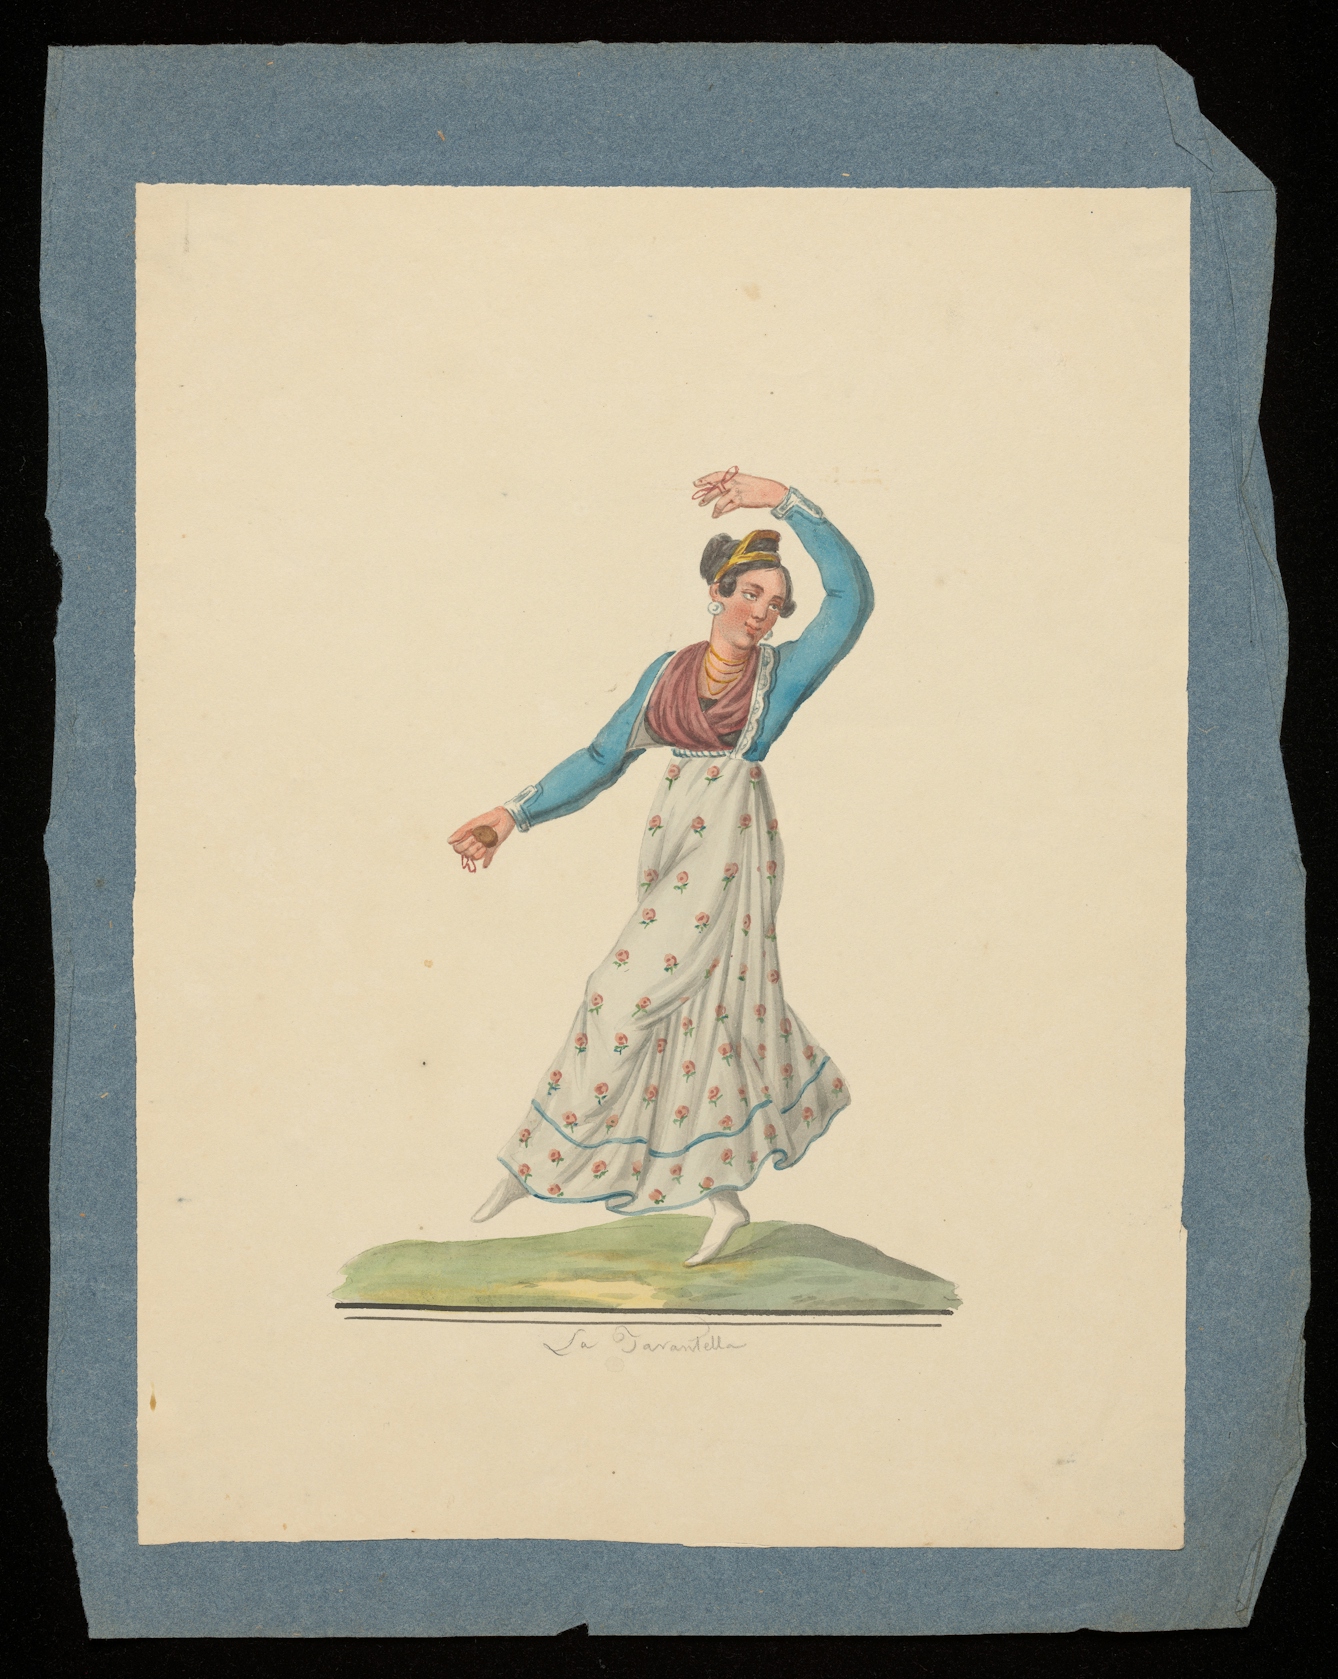 Image of lady dancing, wearing long skirt.